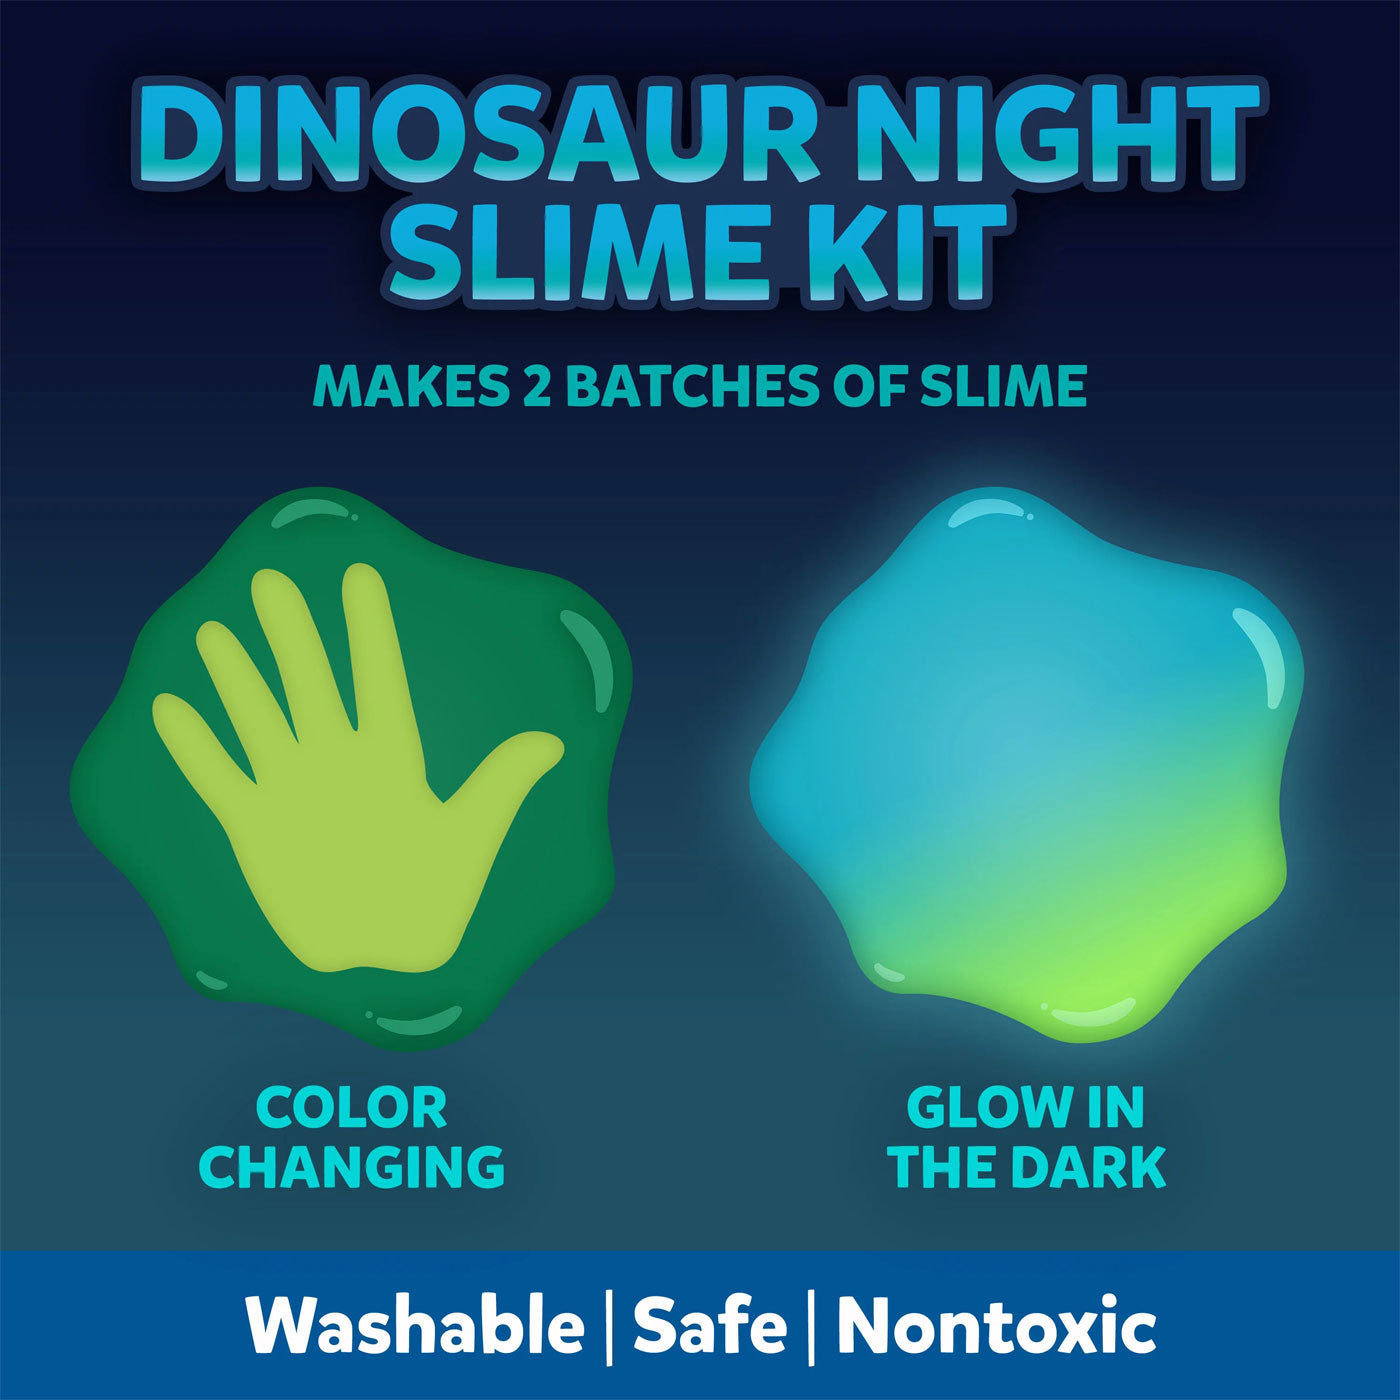 Elmer's Magic Slime Kit Glowing 2 Piece Dinosaur Night